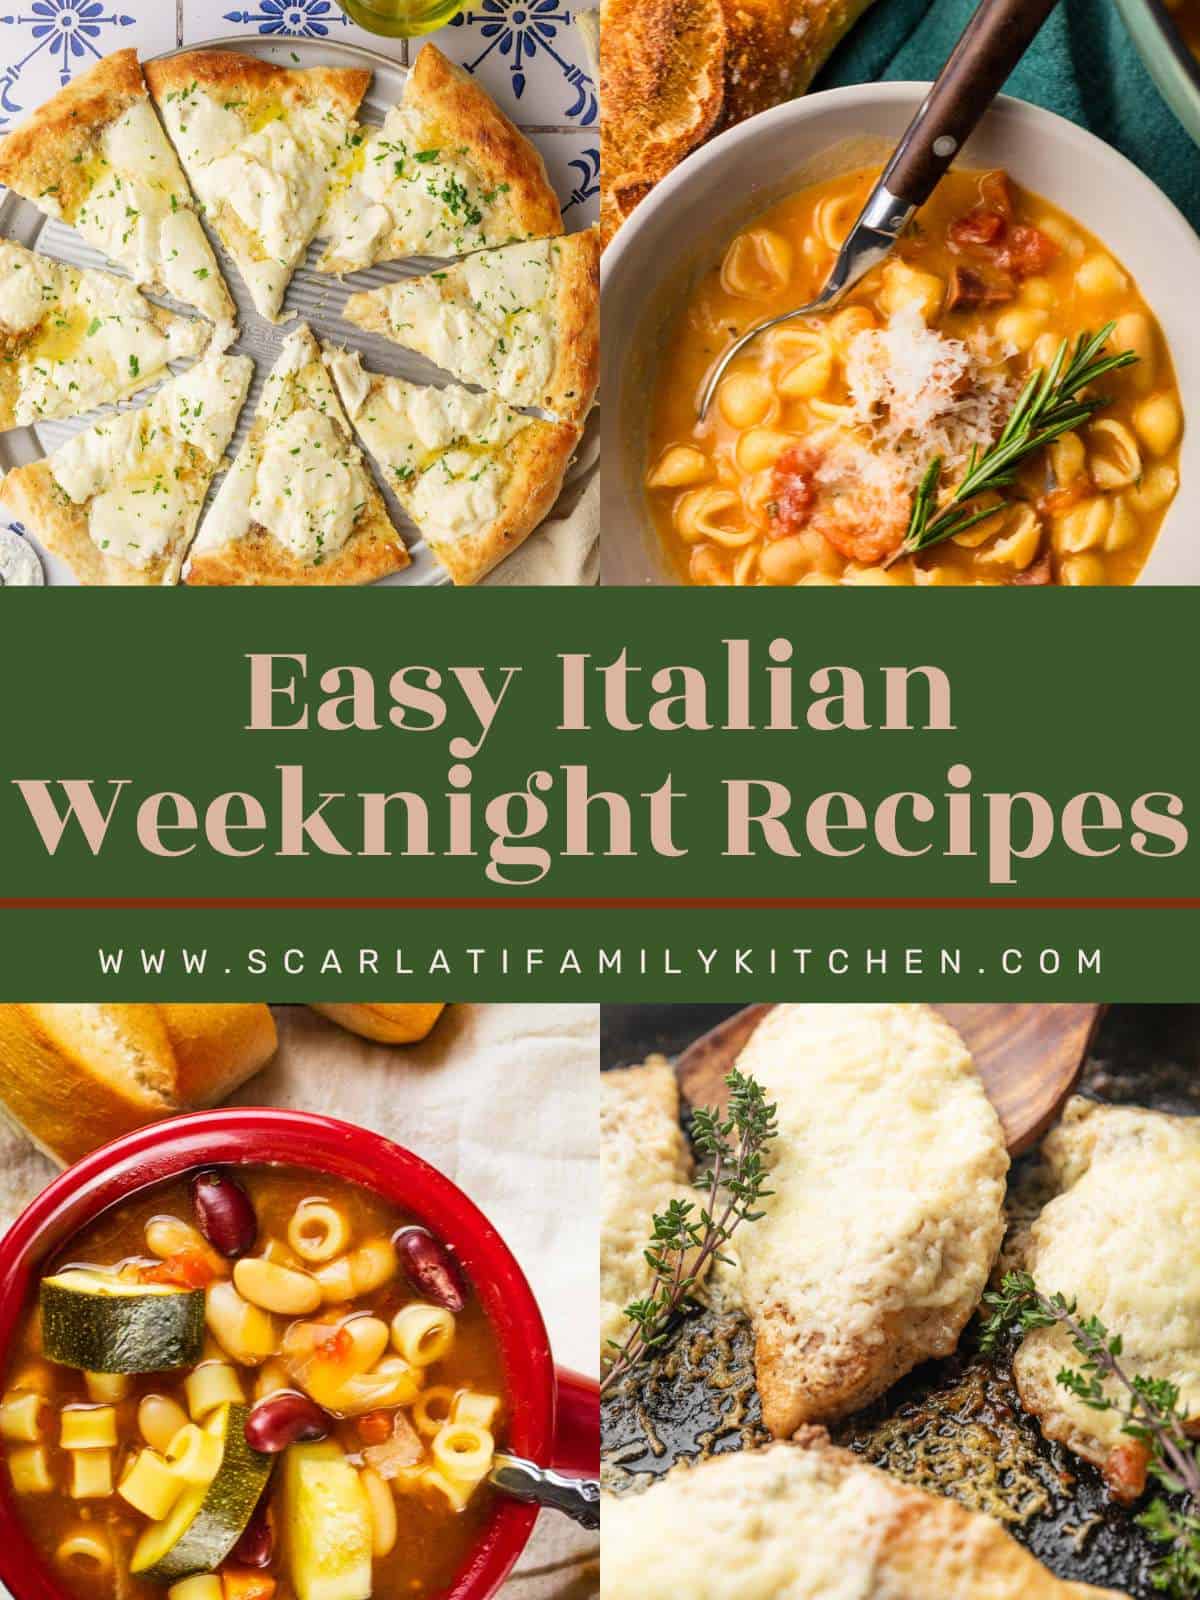 collage of italian recipes with the text overlay "easy italian weeknight recipes".